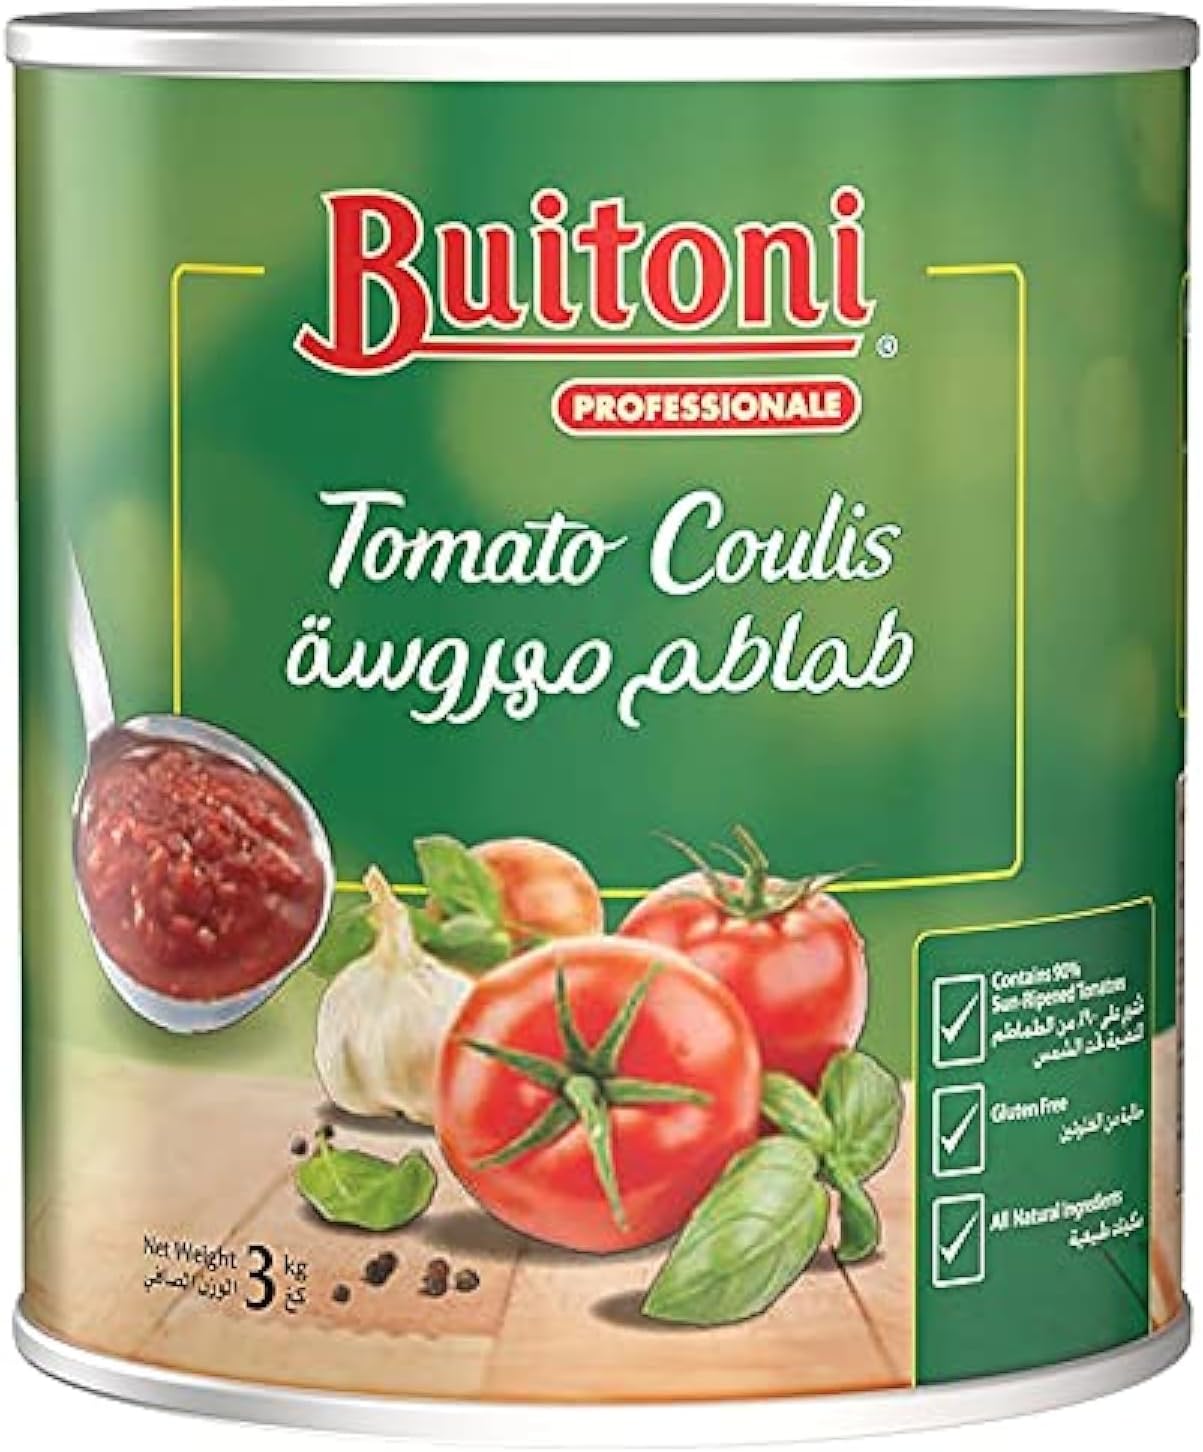 Buitoni - Tomato Coulis Sauce - Box Of 6 Pieces - 3 KG